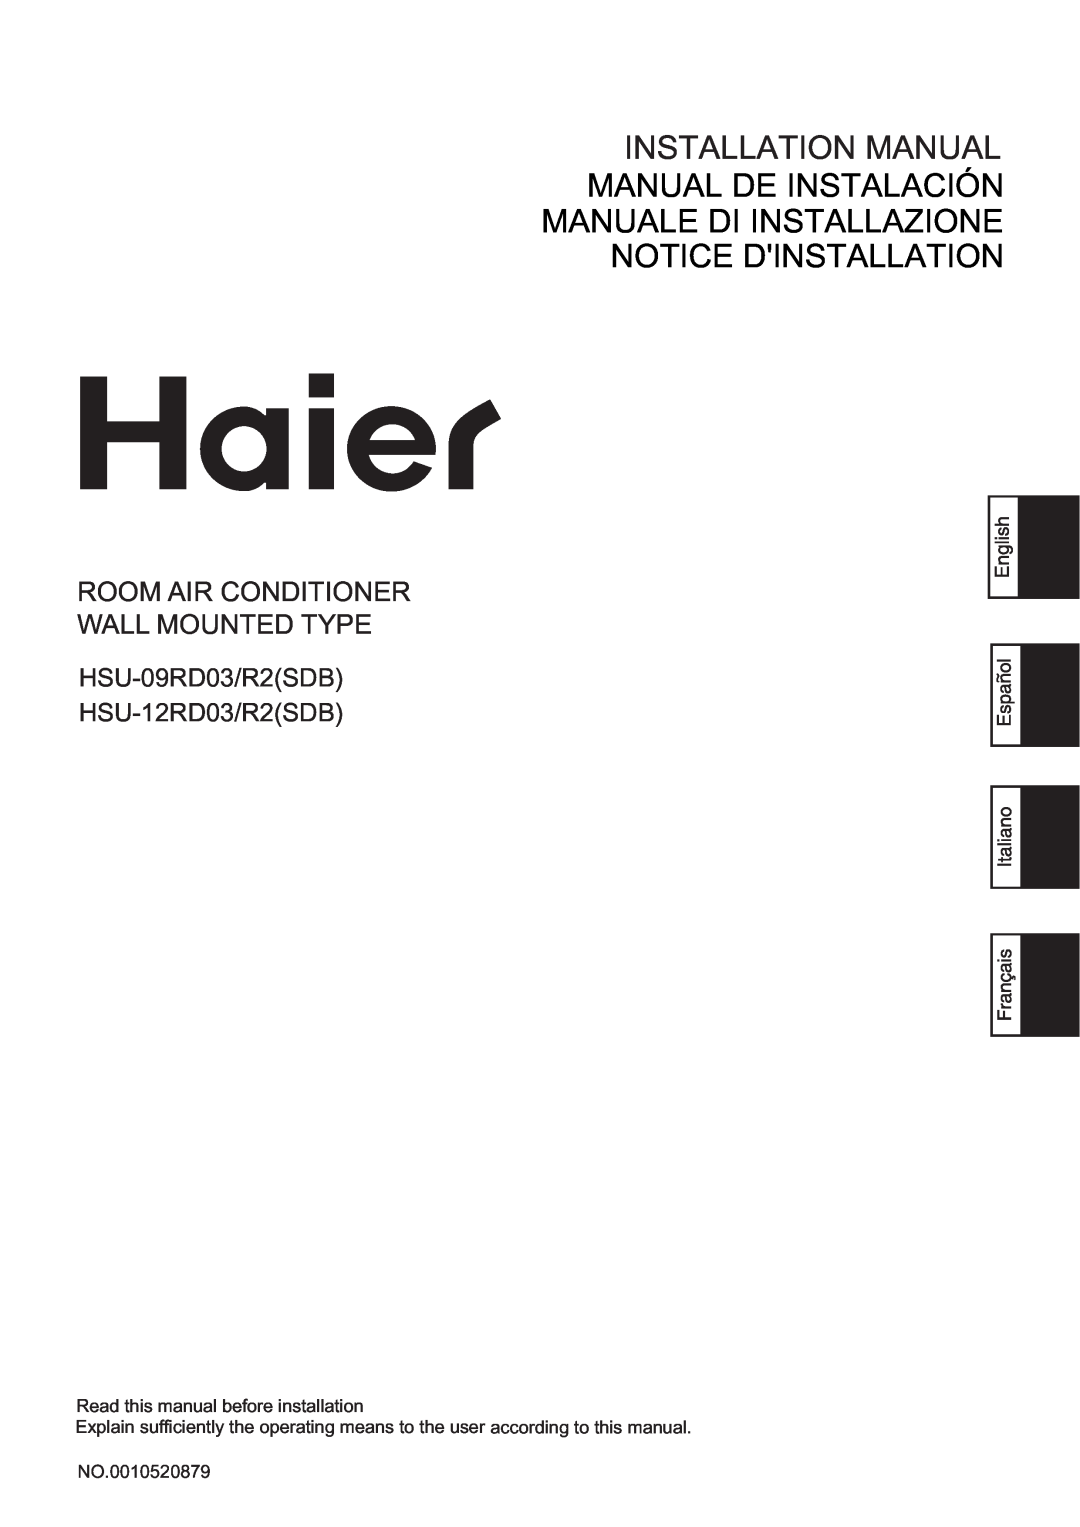 Hitachi HSU-09RD03/R2(SDB) installation manual Installation Manual, Manual De Instalación Manuale Di Installazione 